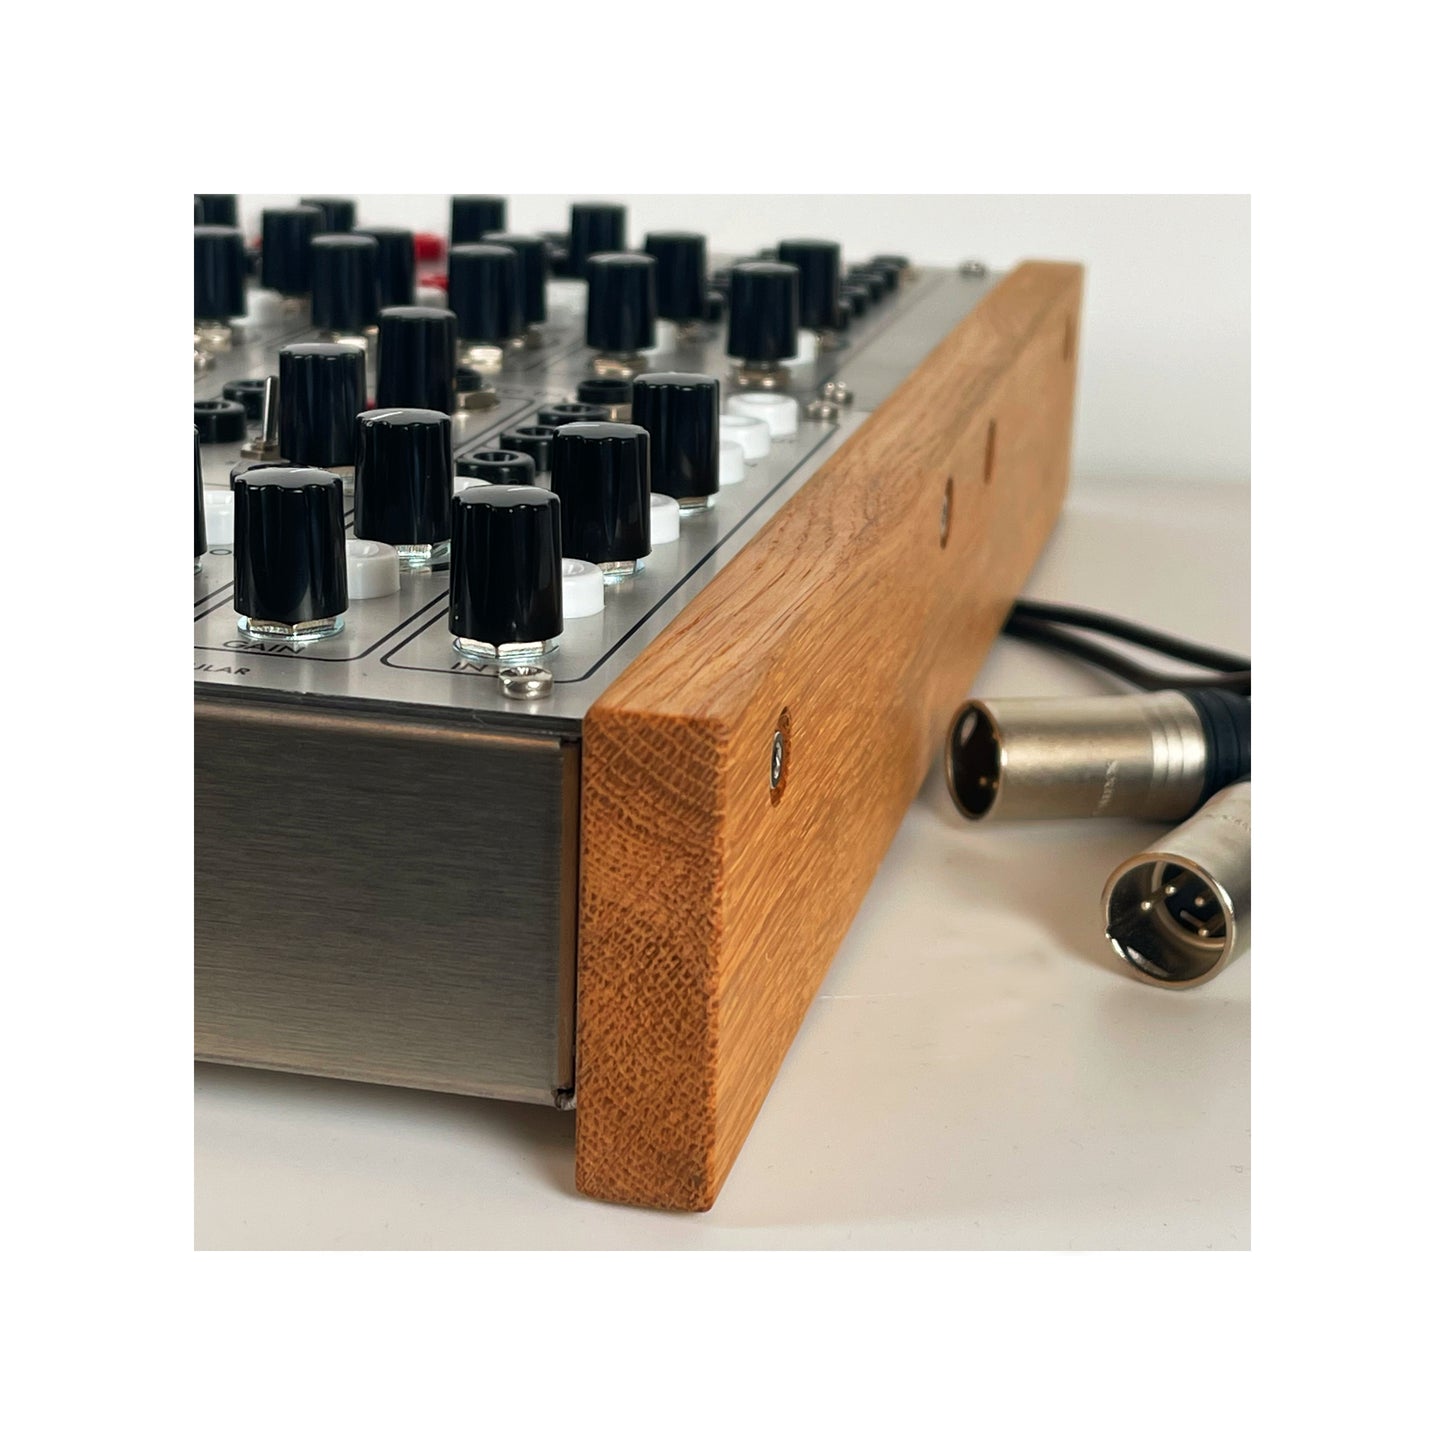 Serge Modular 2 Panel Inori Audio Interface, Dual GTO and Sequencer System